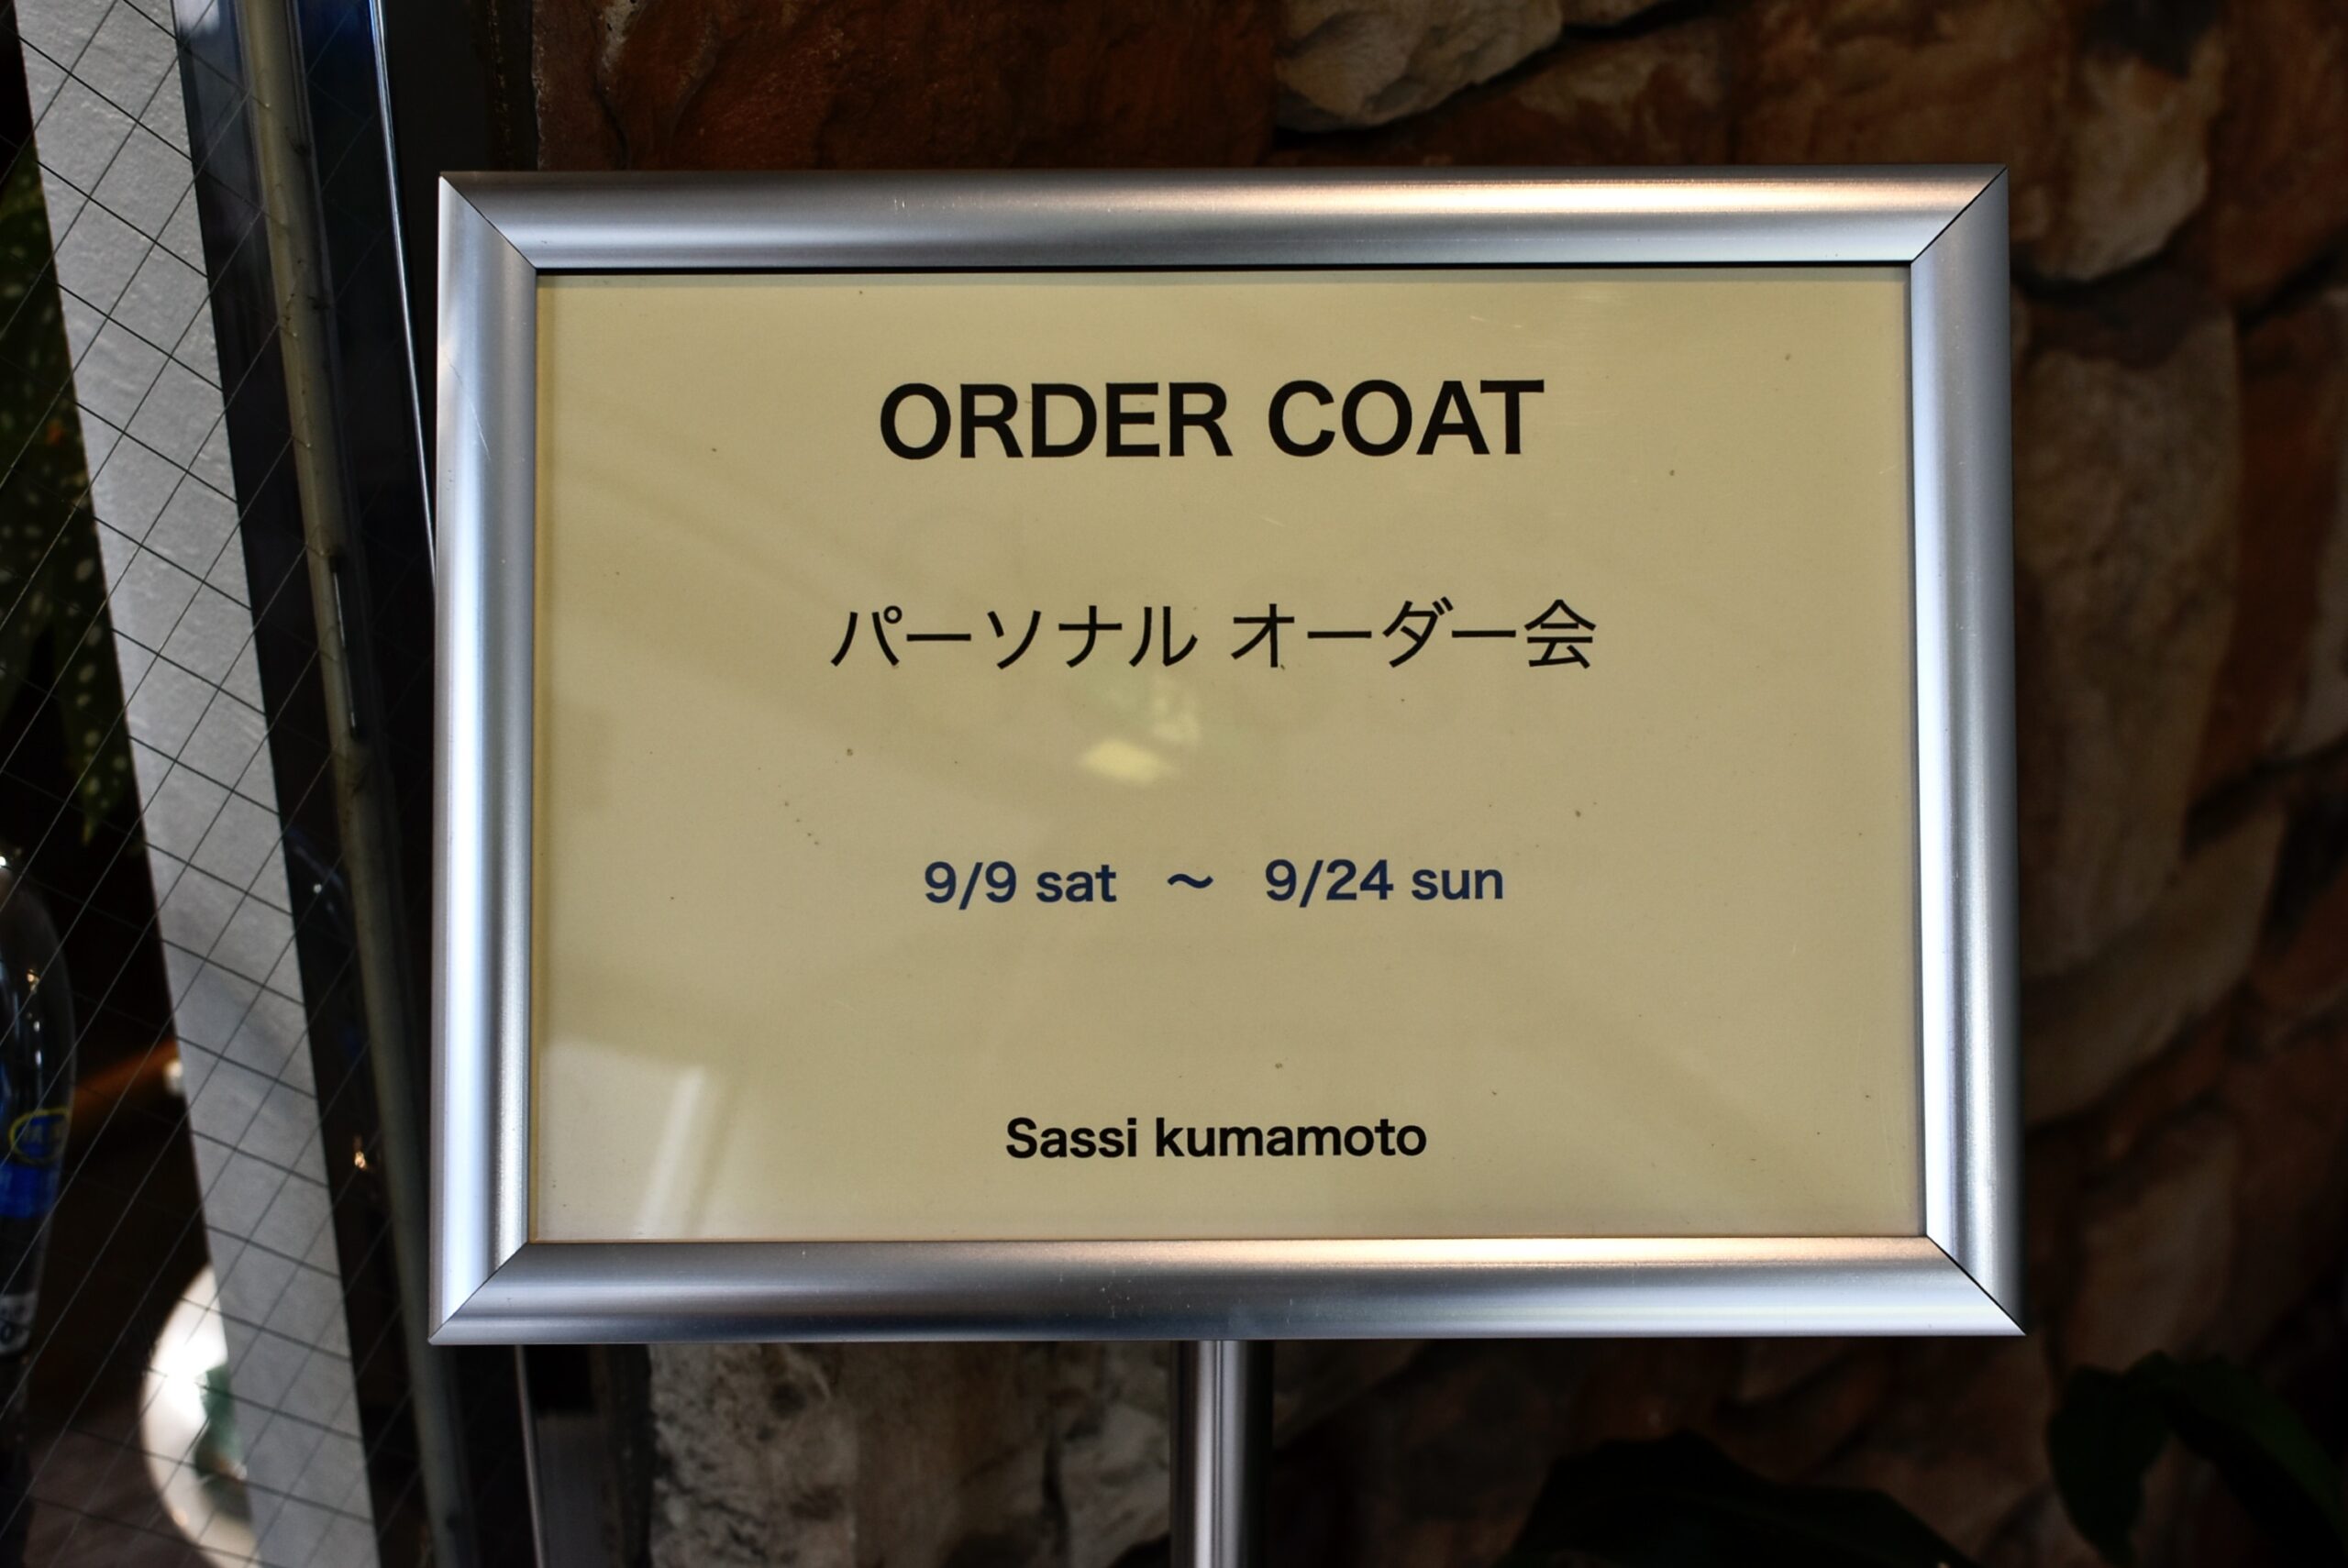 ” ORDER COAT